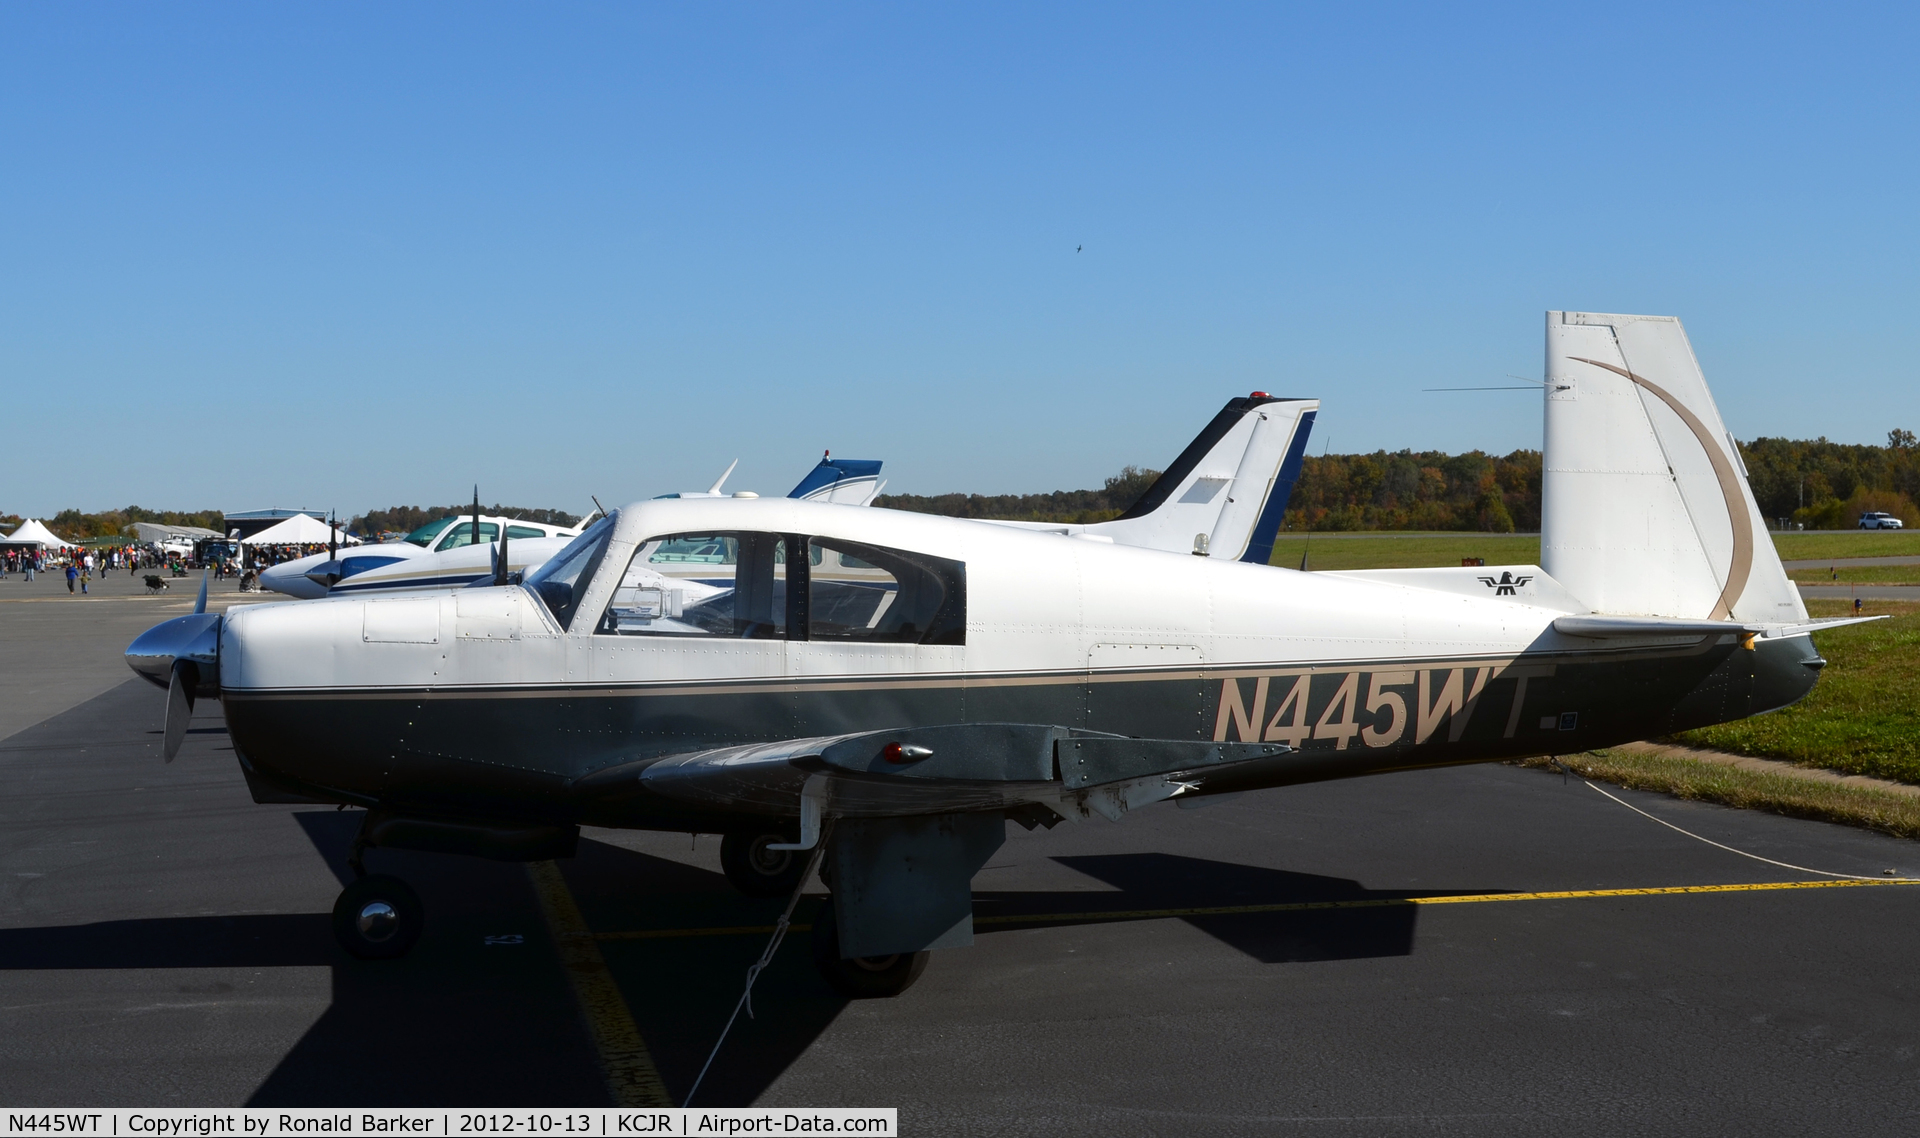 N445WT, 1964 Mooney M20C Ranger C/N 2776, Culpeper Air Fest 2012